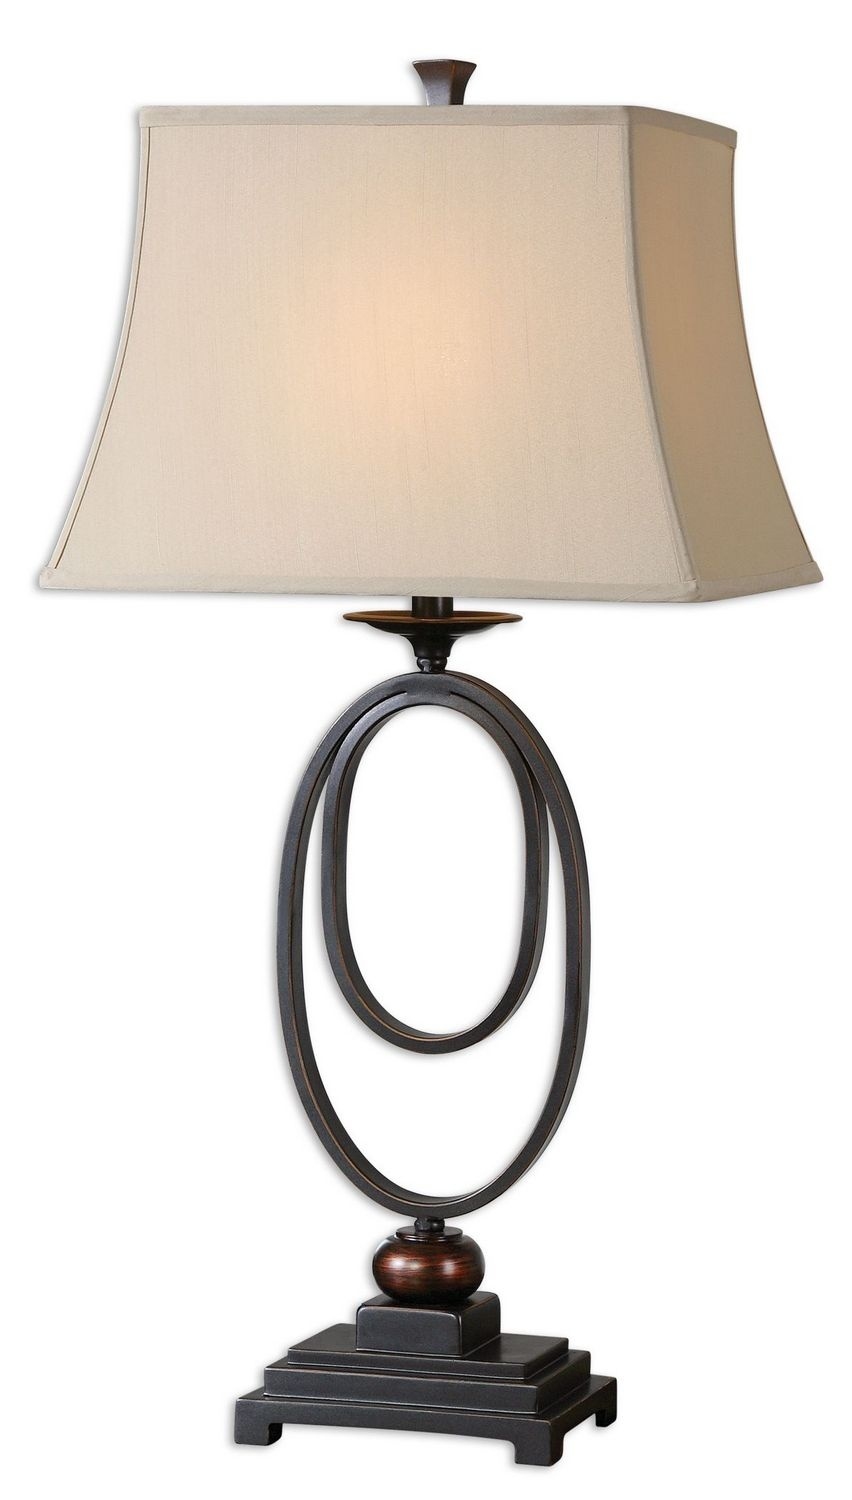 Uttermost Orienta Table Lamp - Set of 2